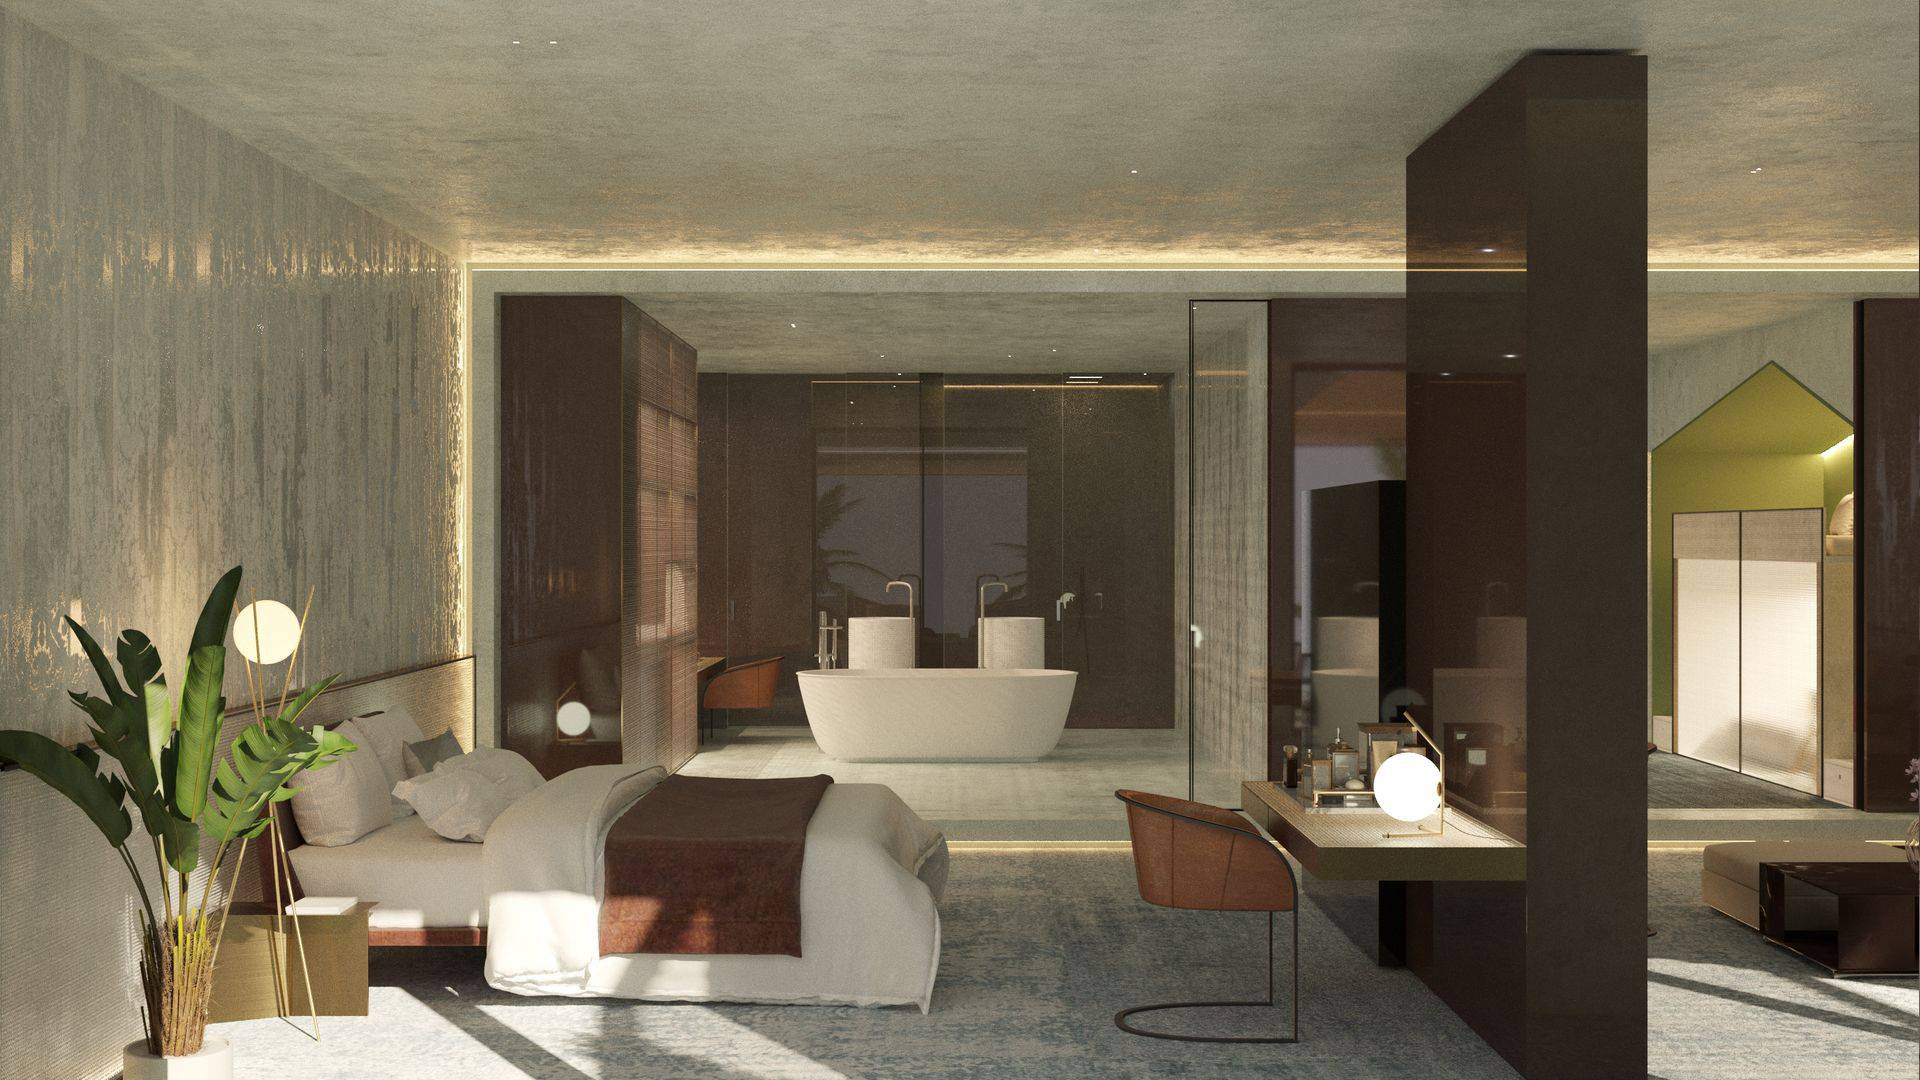 Apartment for sale in The World Islands, Dubai, UAE, 1 bedroom, 67 m², No. 25151 – photo 1